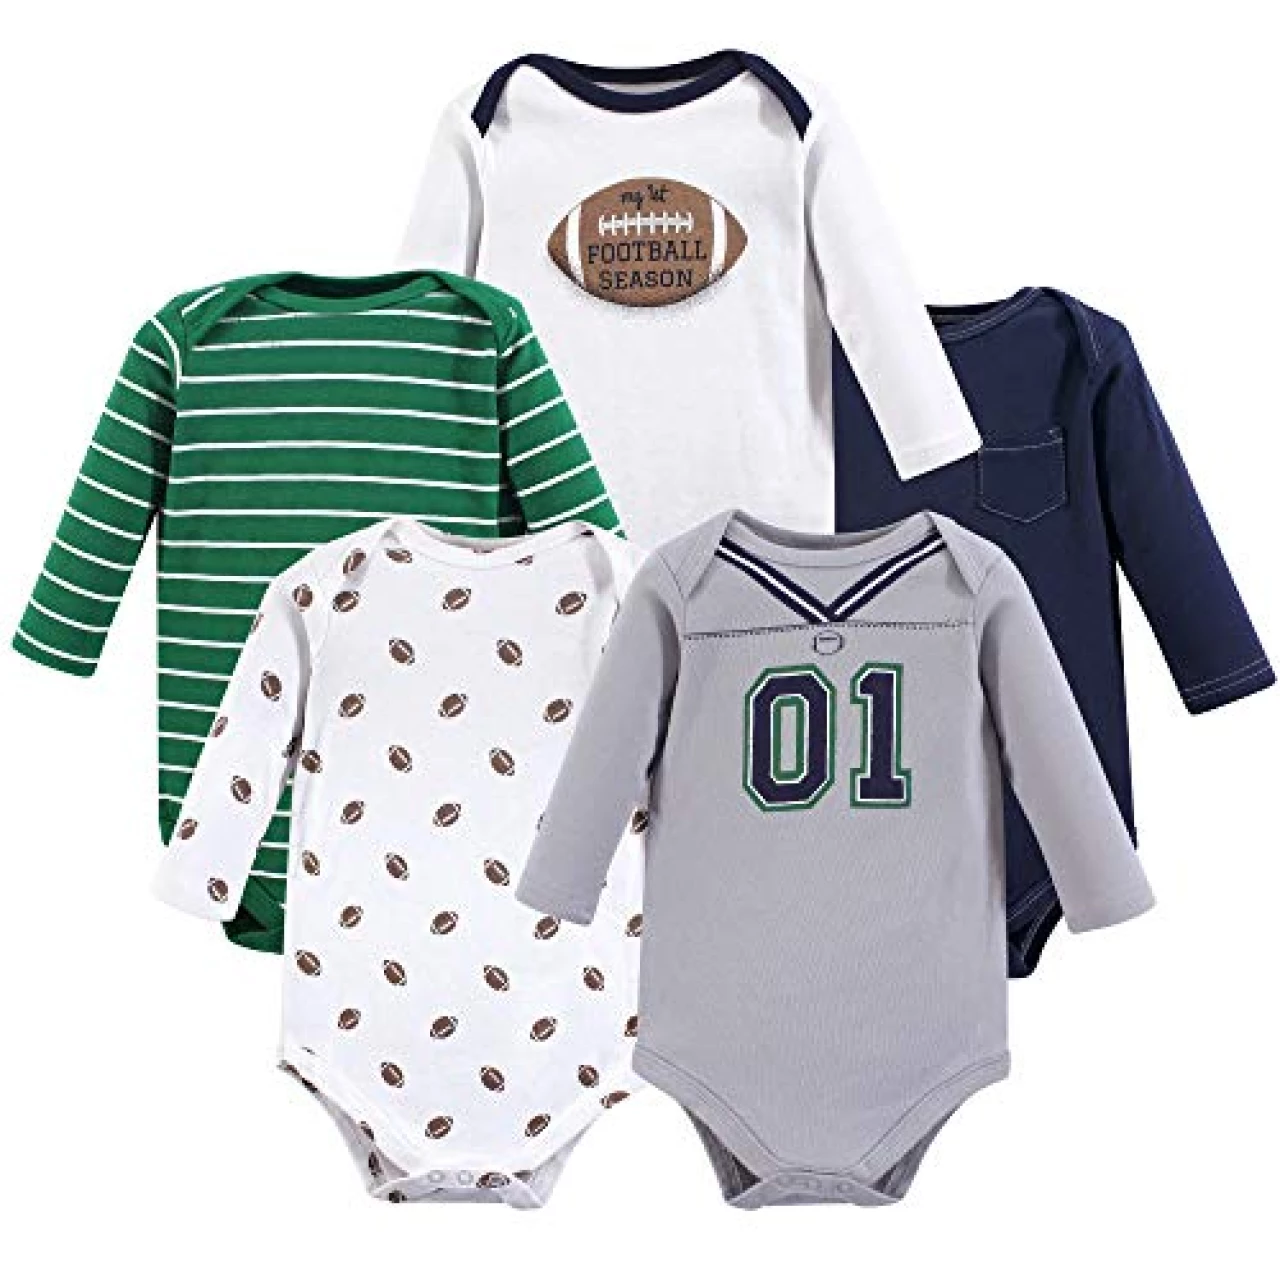 Little Treasure Unisex Baby Cotton Bodysuits, Football, 9-12 Months